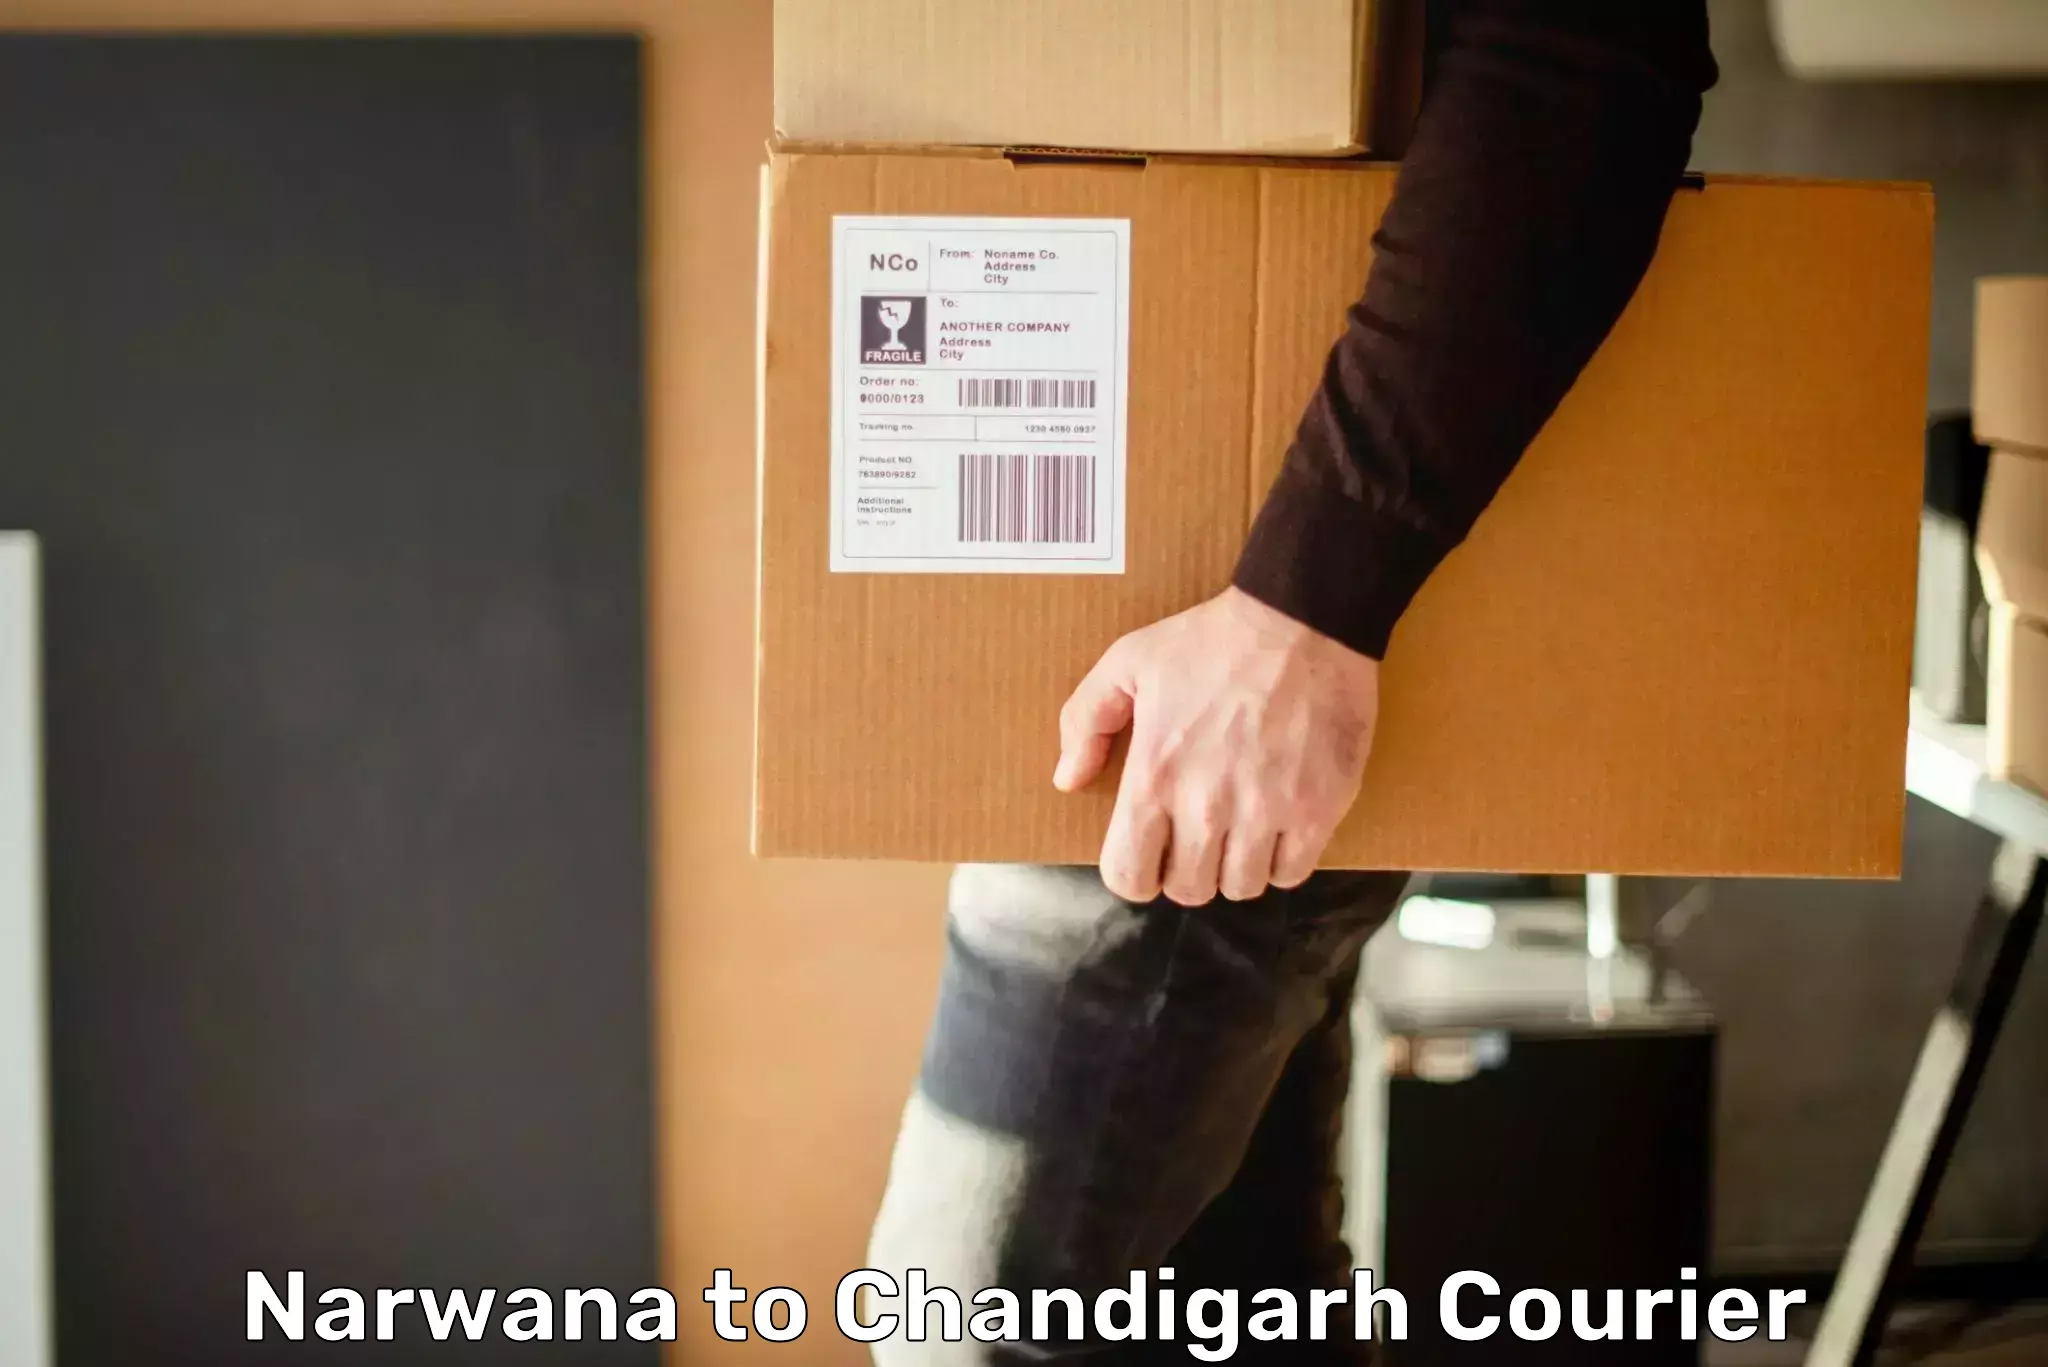 Courier service innovation Narwana to Chandigarh